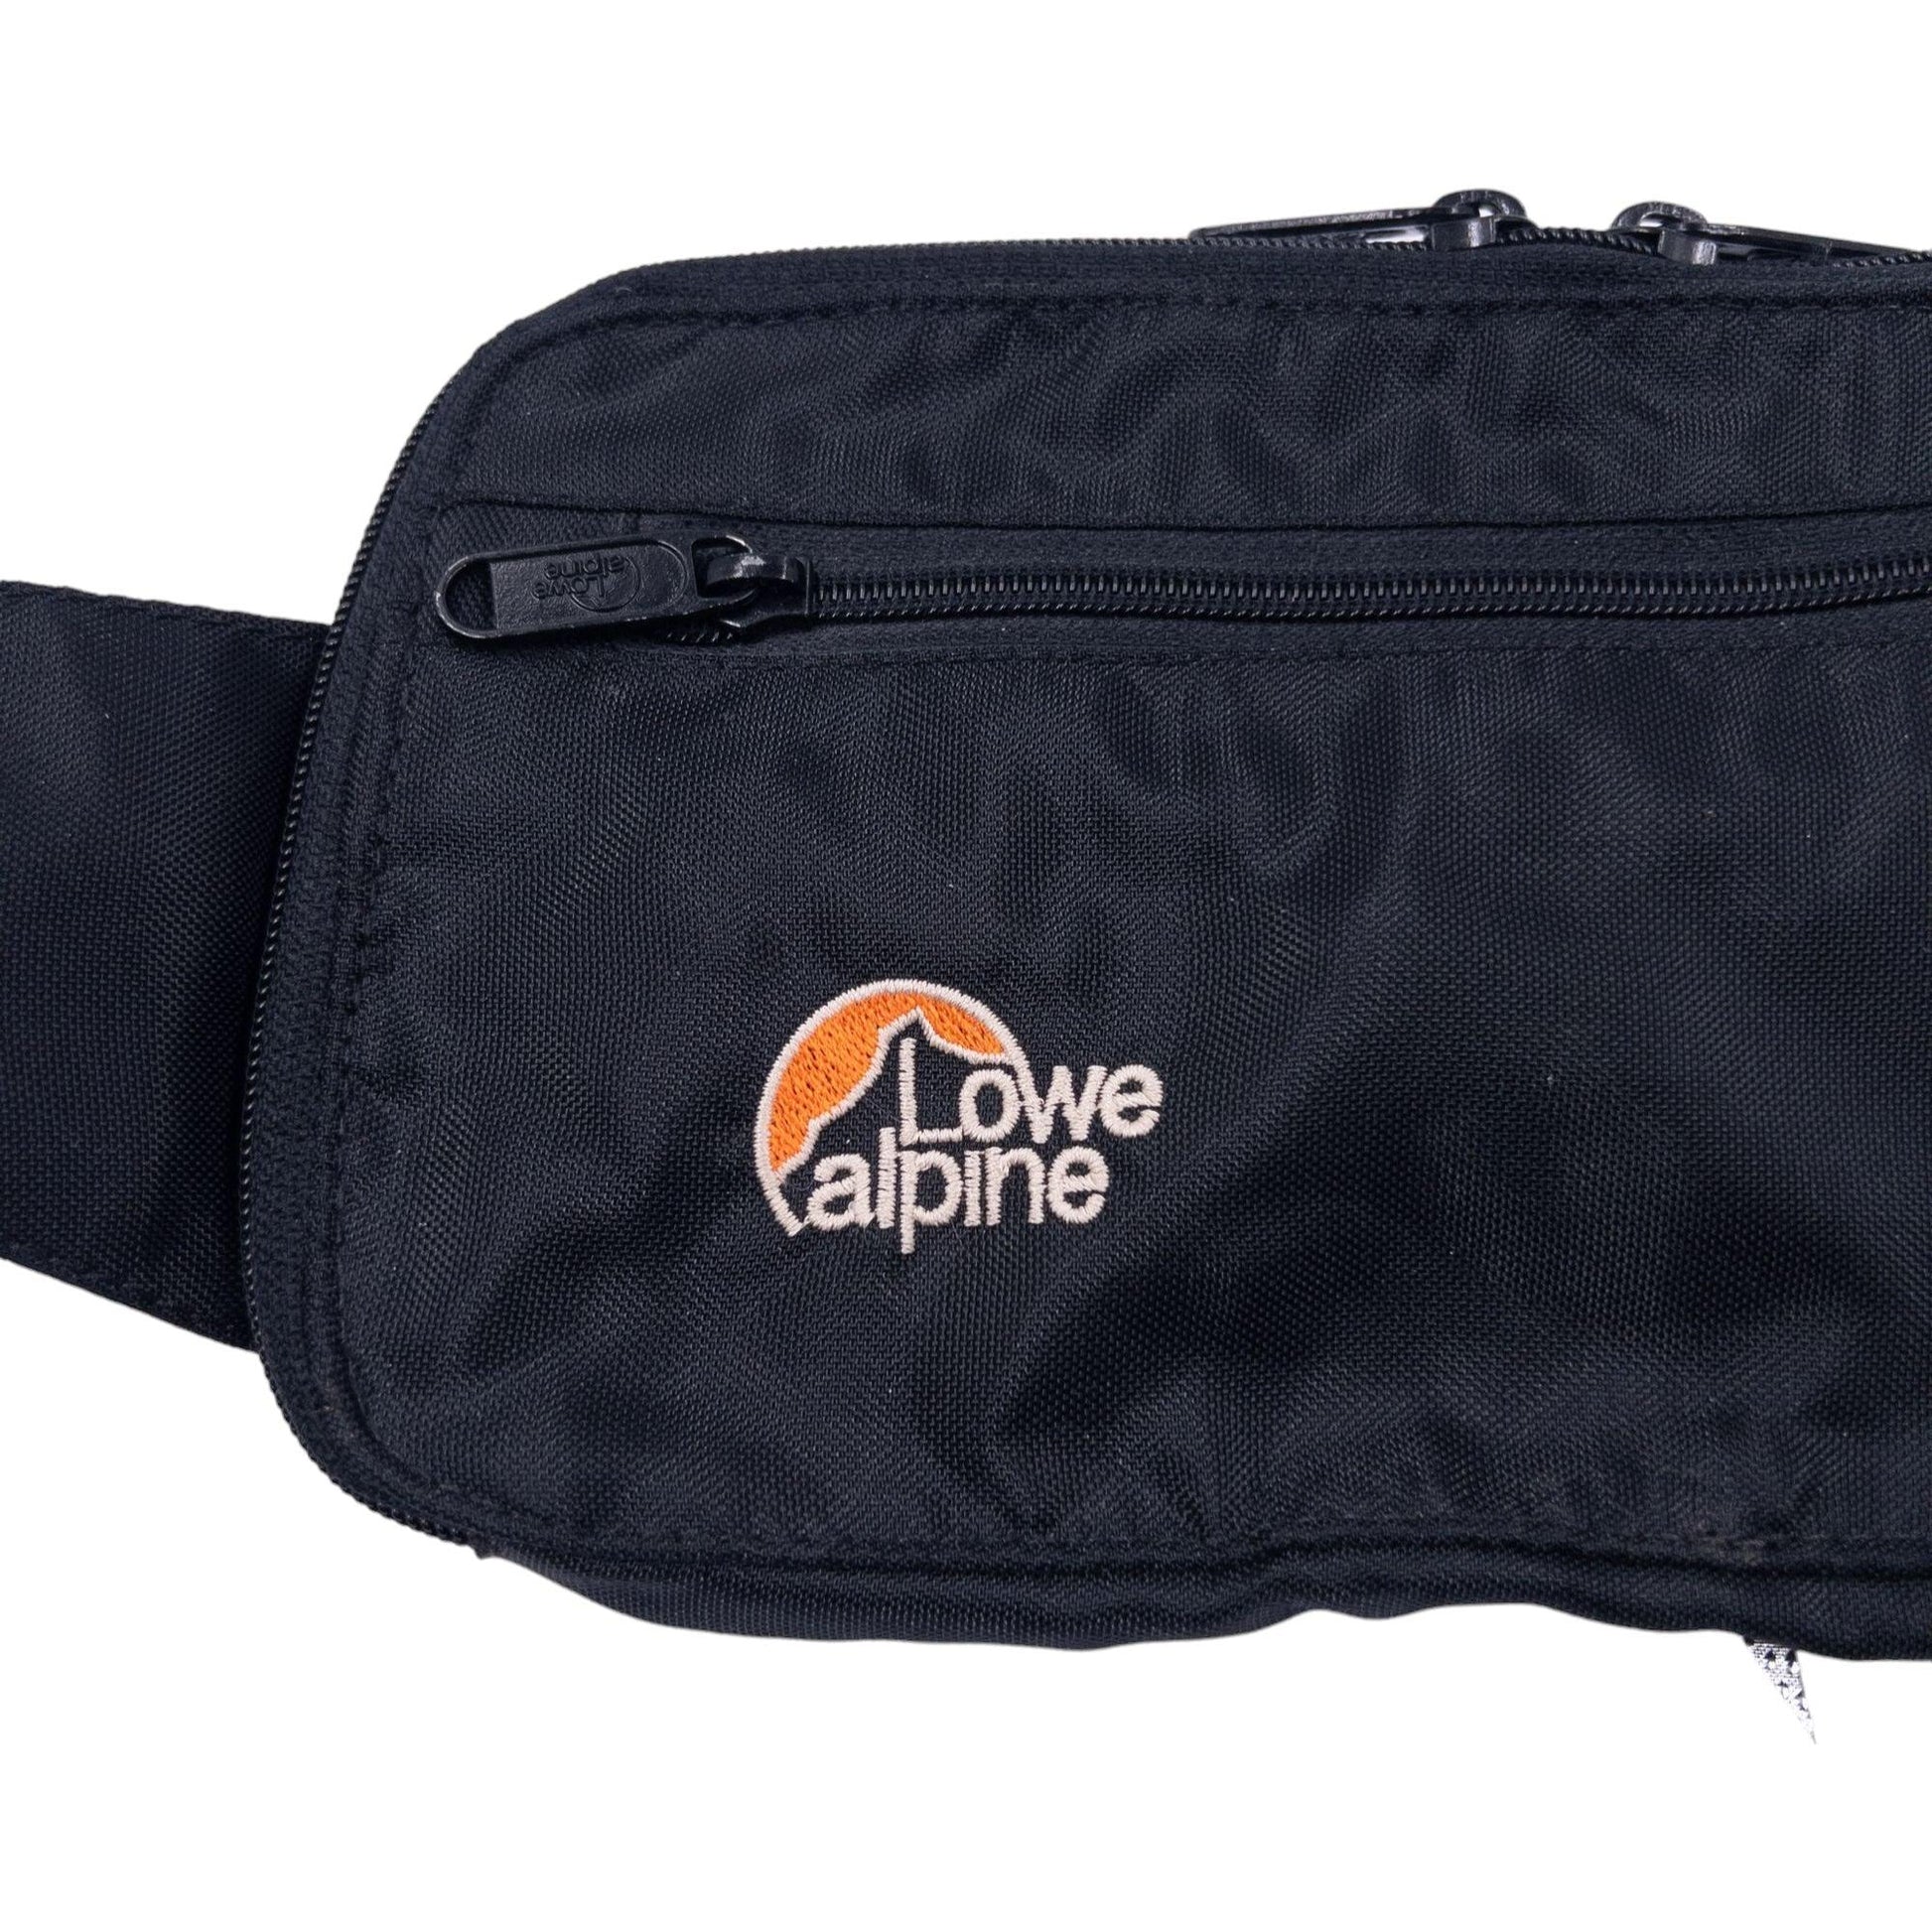 Vintage Lowe Alpine Bum Bag - Known Source